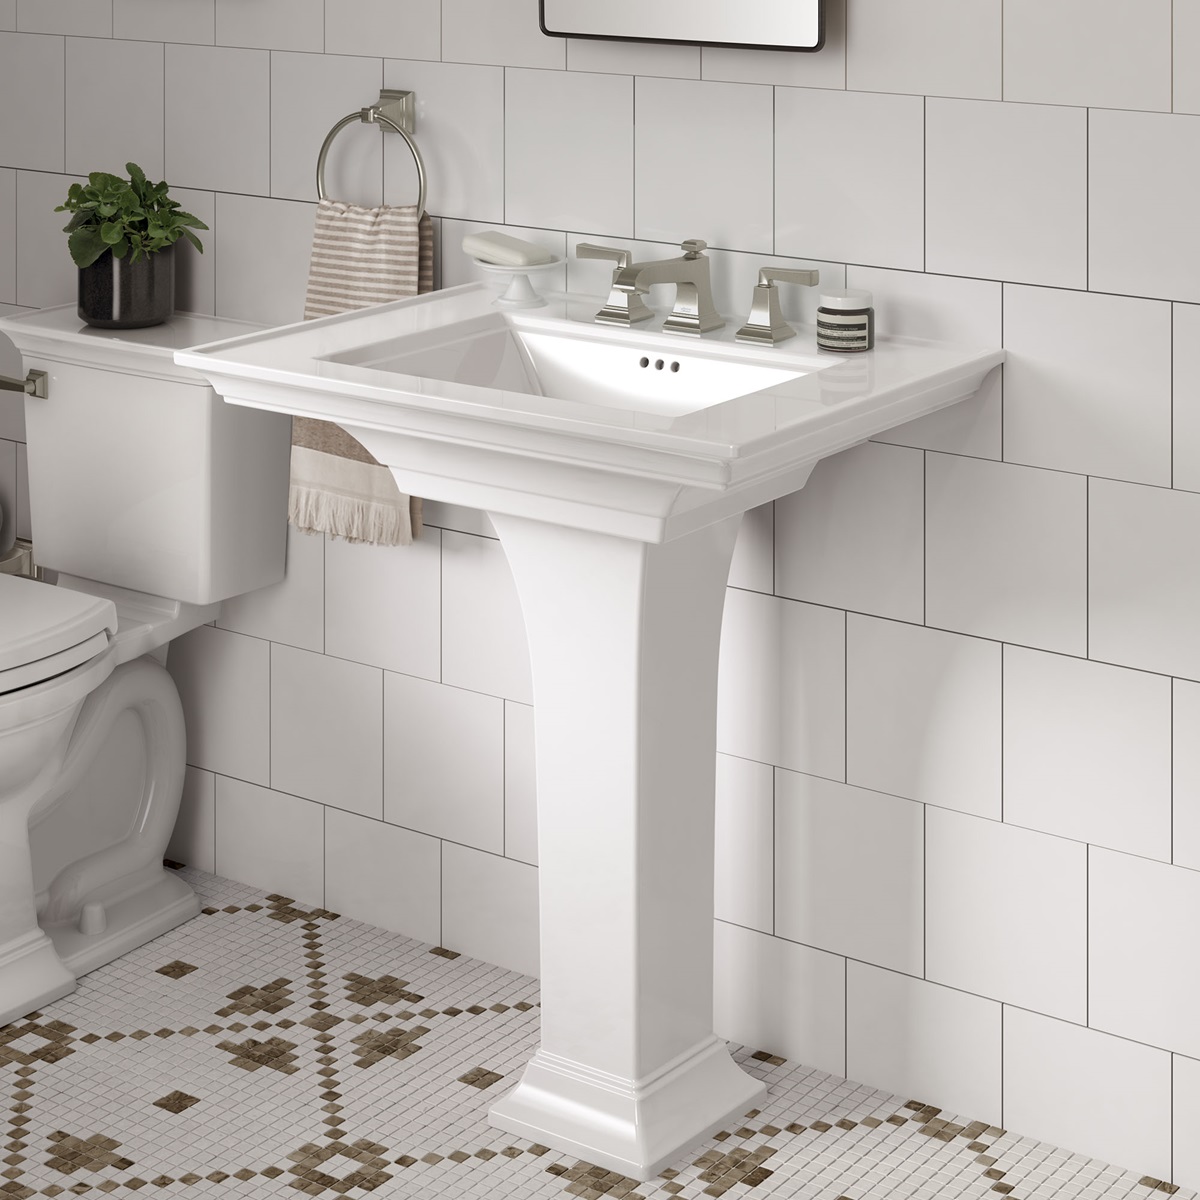 Town Square S Best Pedestal Bathroom Sink